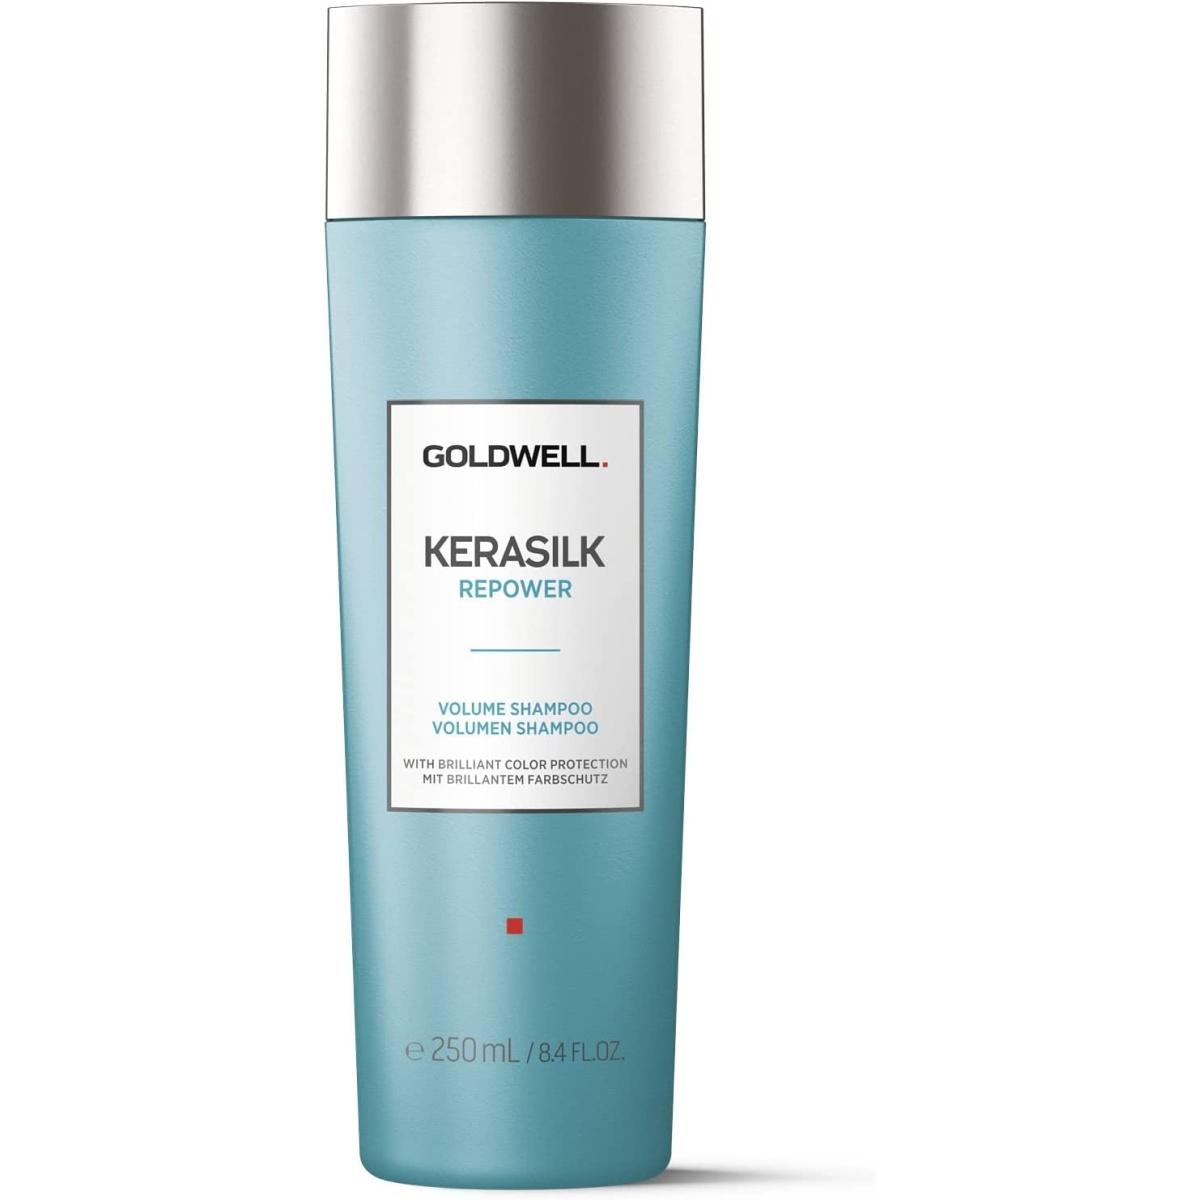 Goldwell. Kerasilk Volume Shampoo 250 ml